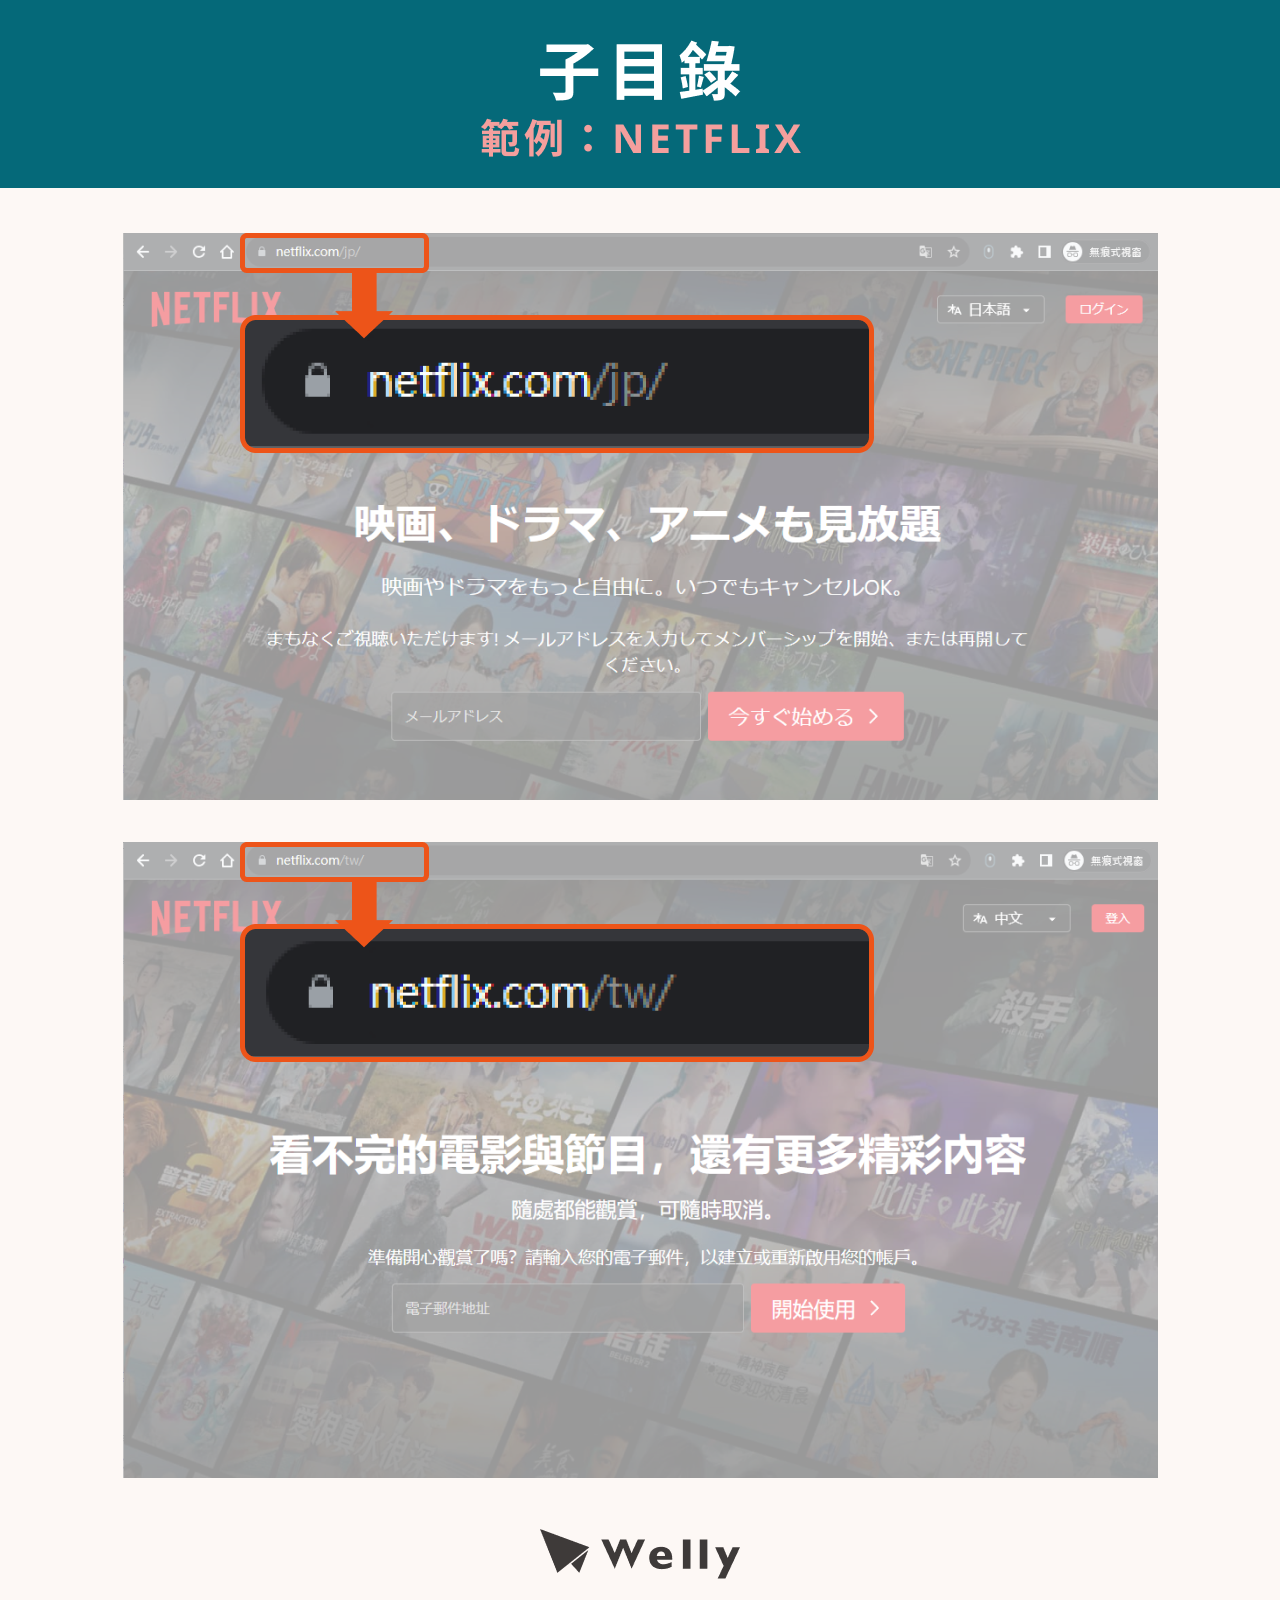 Netflix 透過子目錄方式架設多語言網站